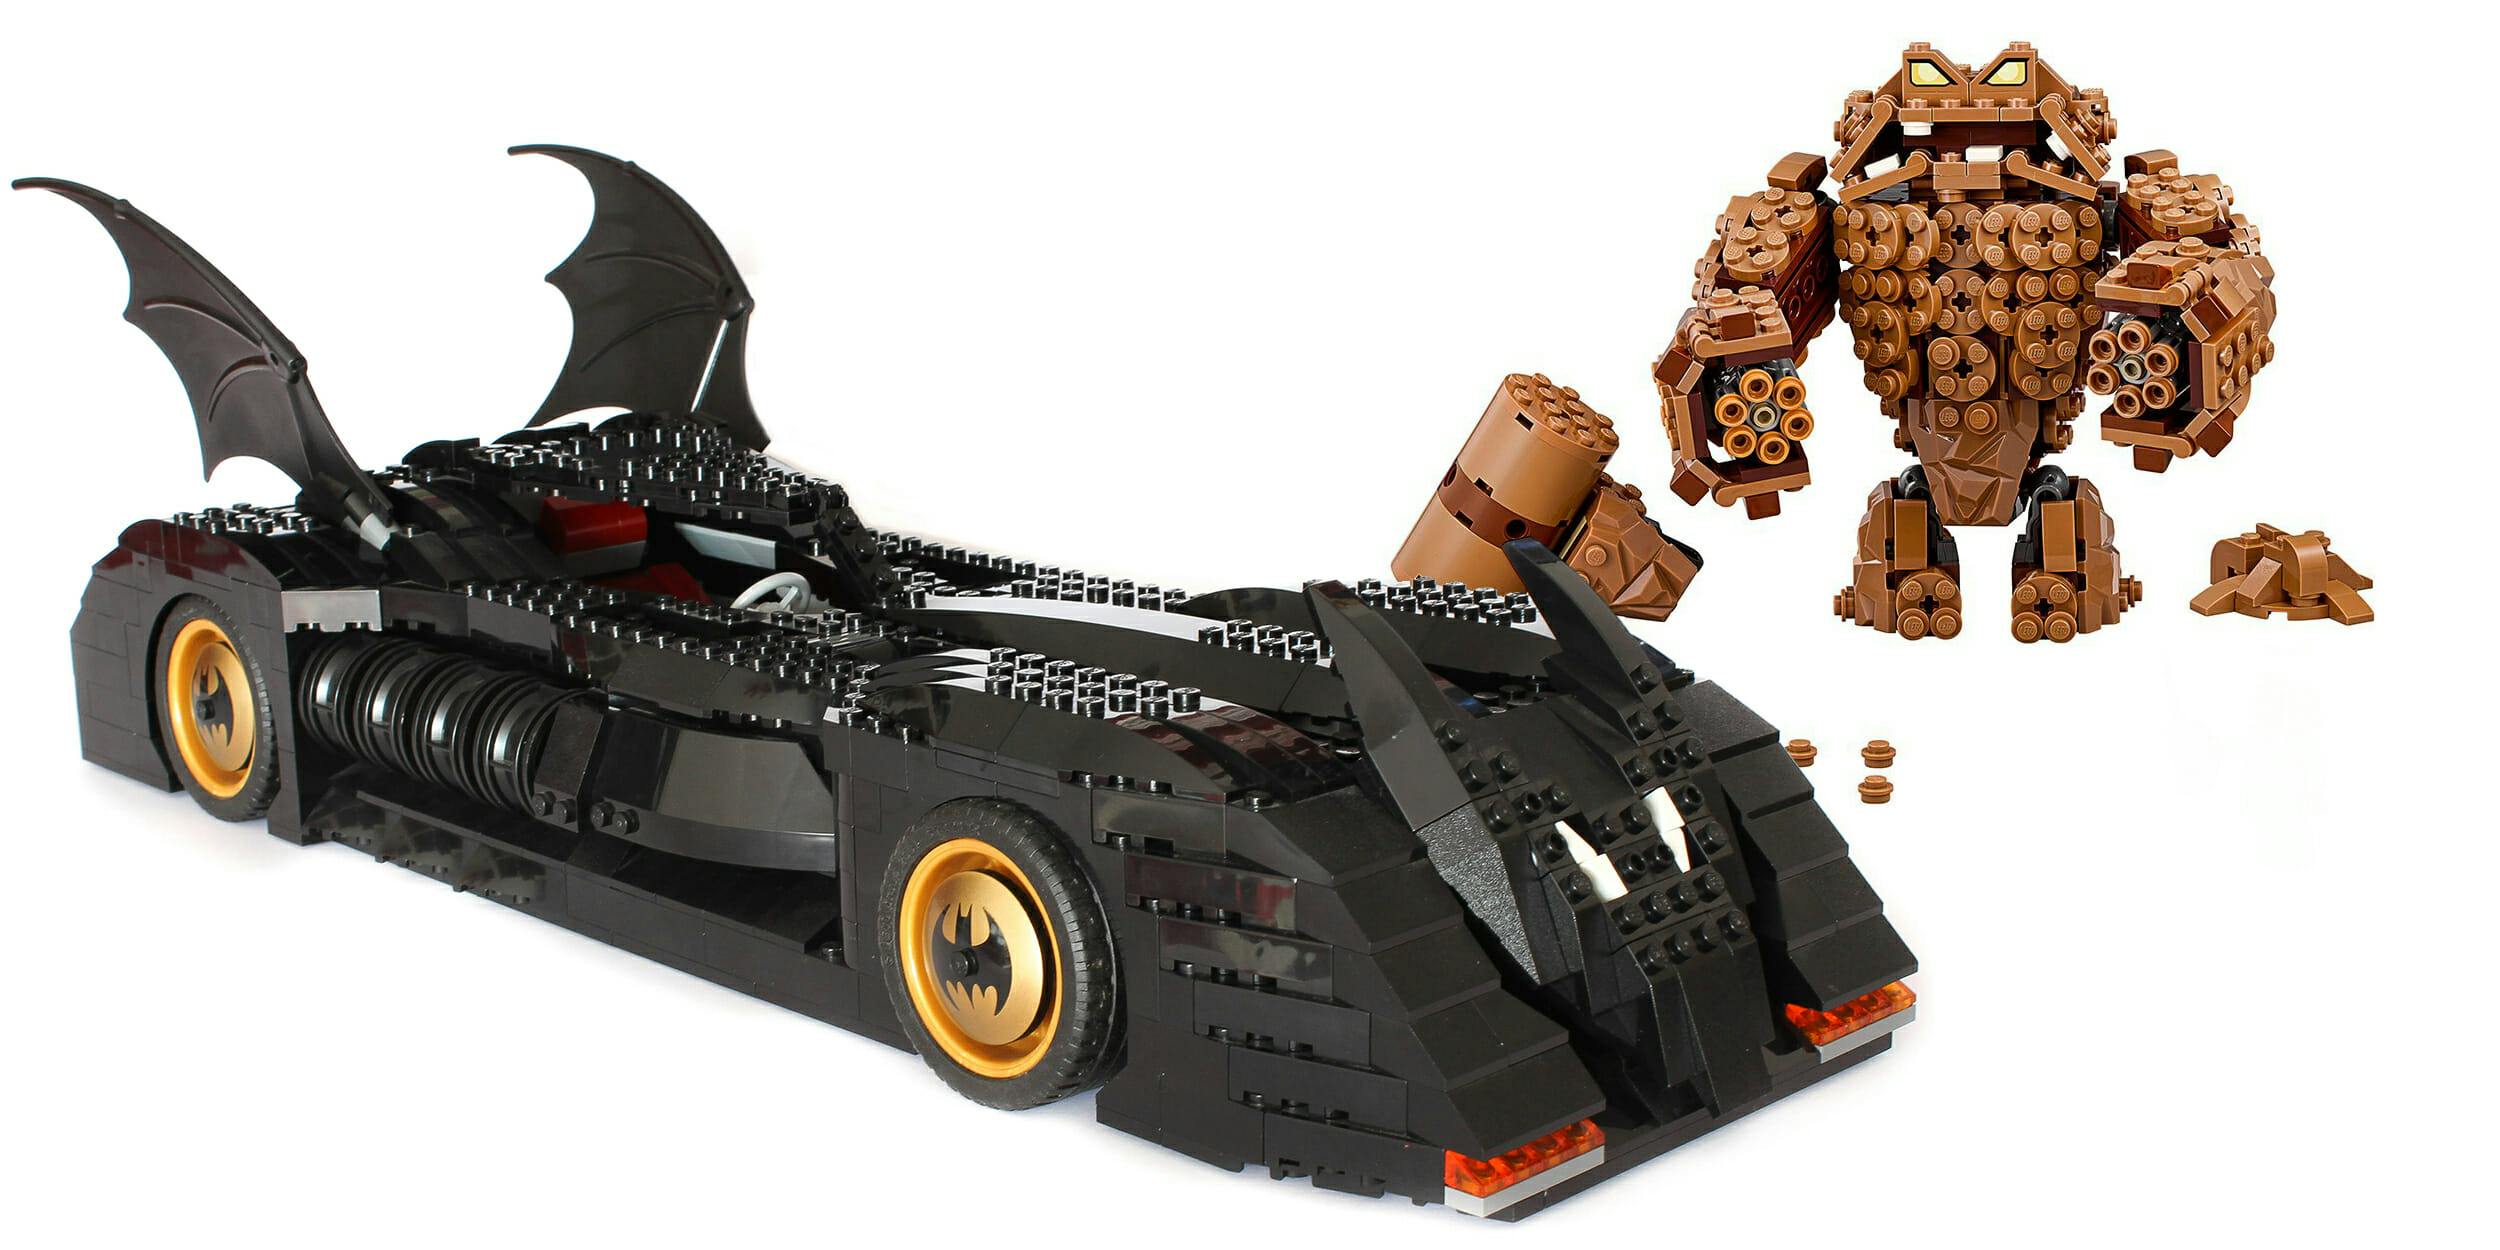 The Lego Batman Sets for Your Inner Dark